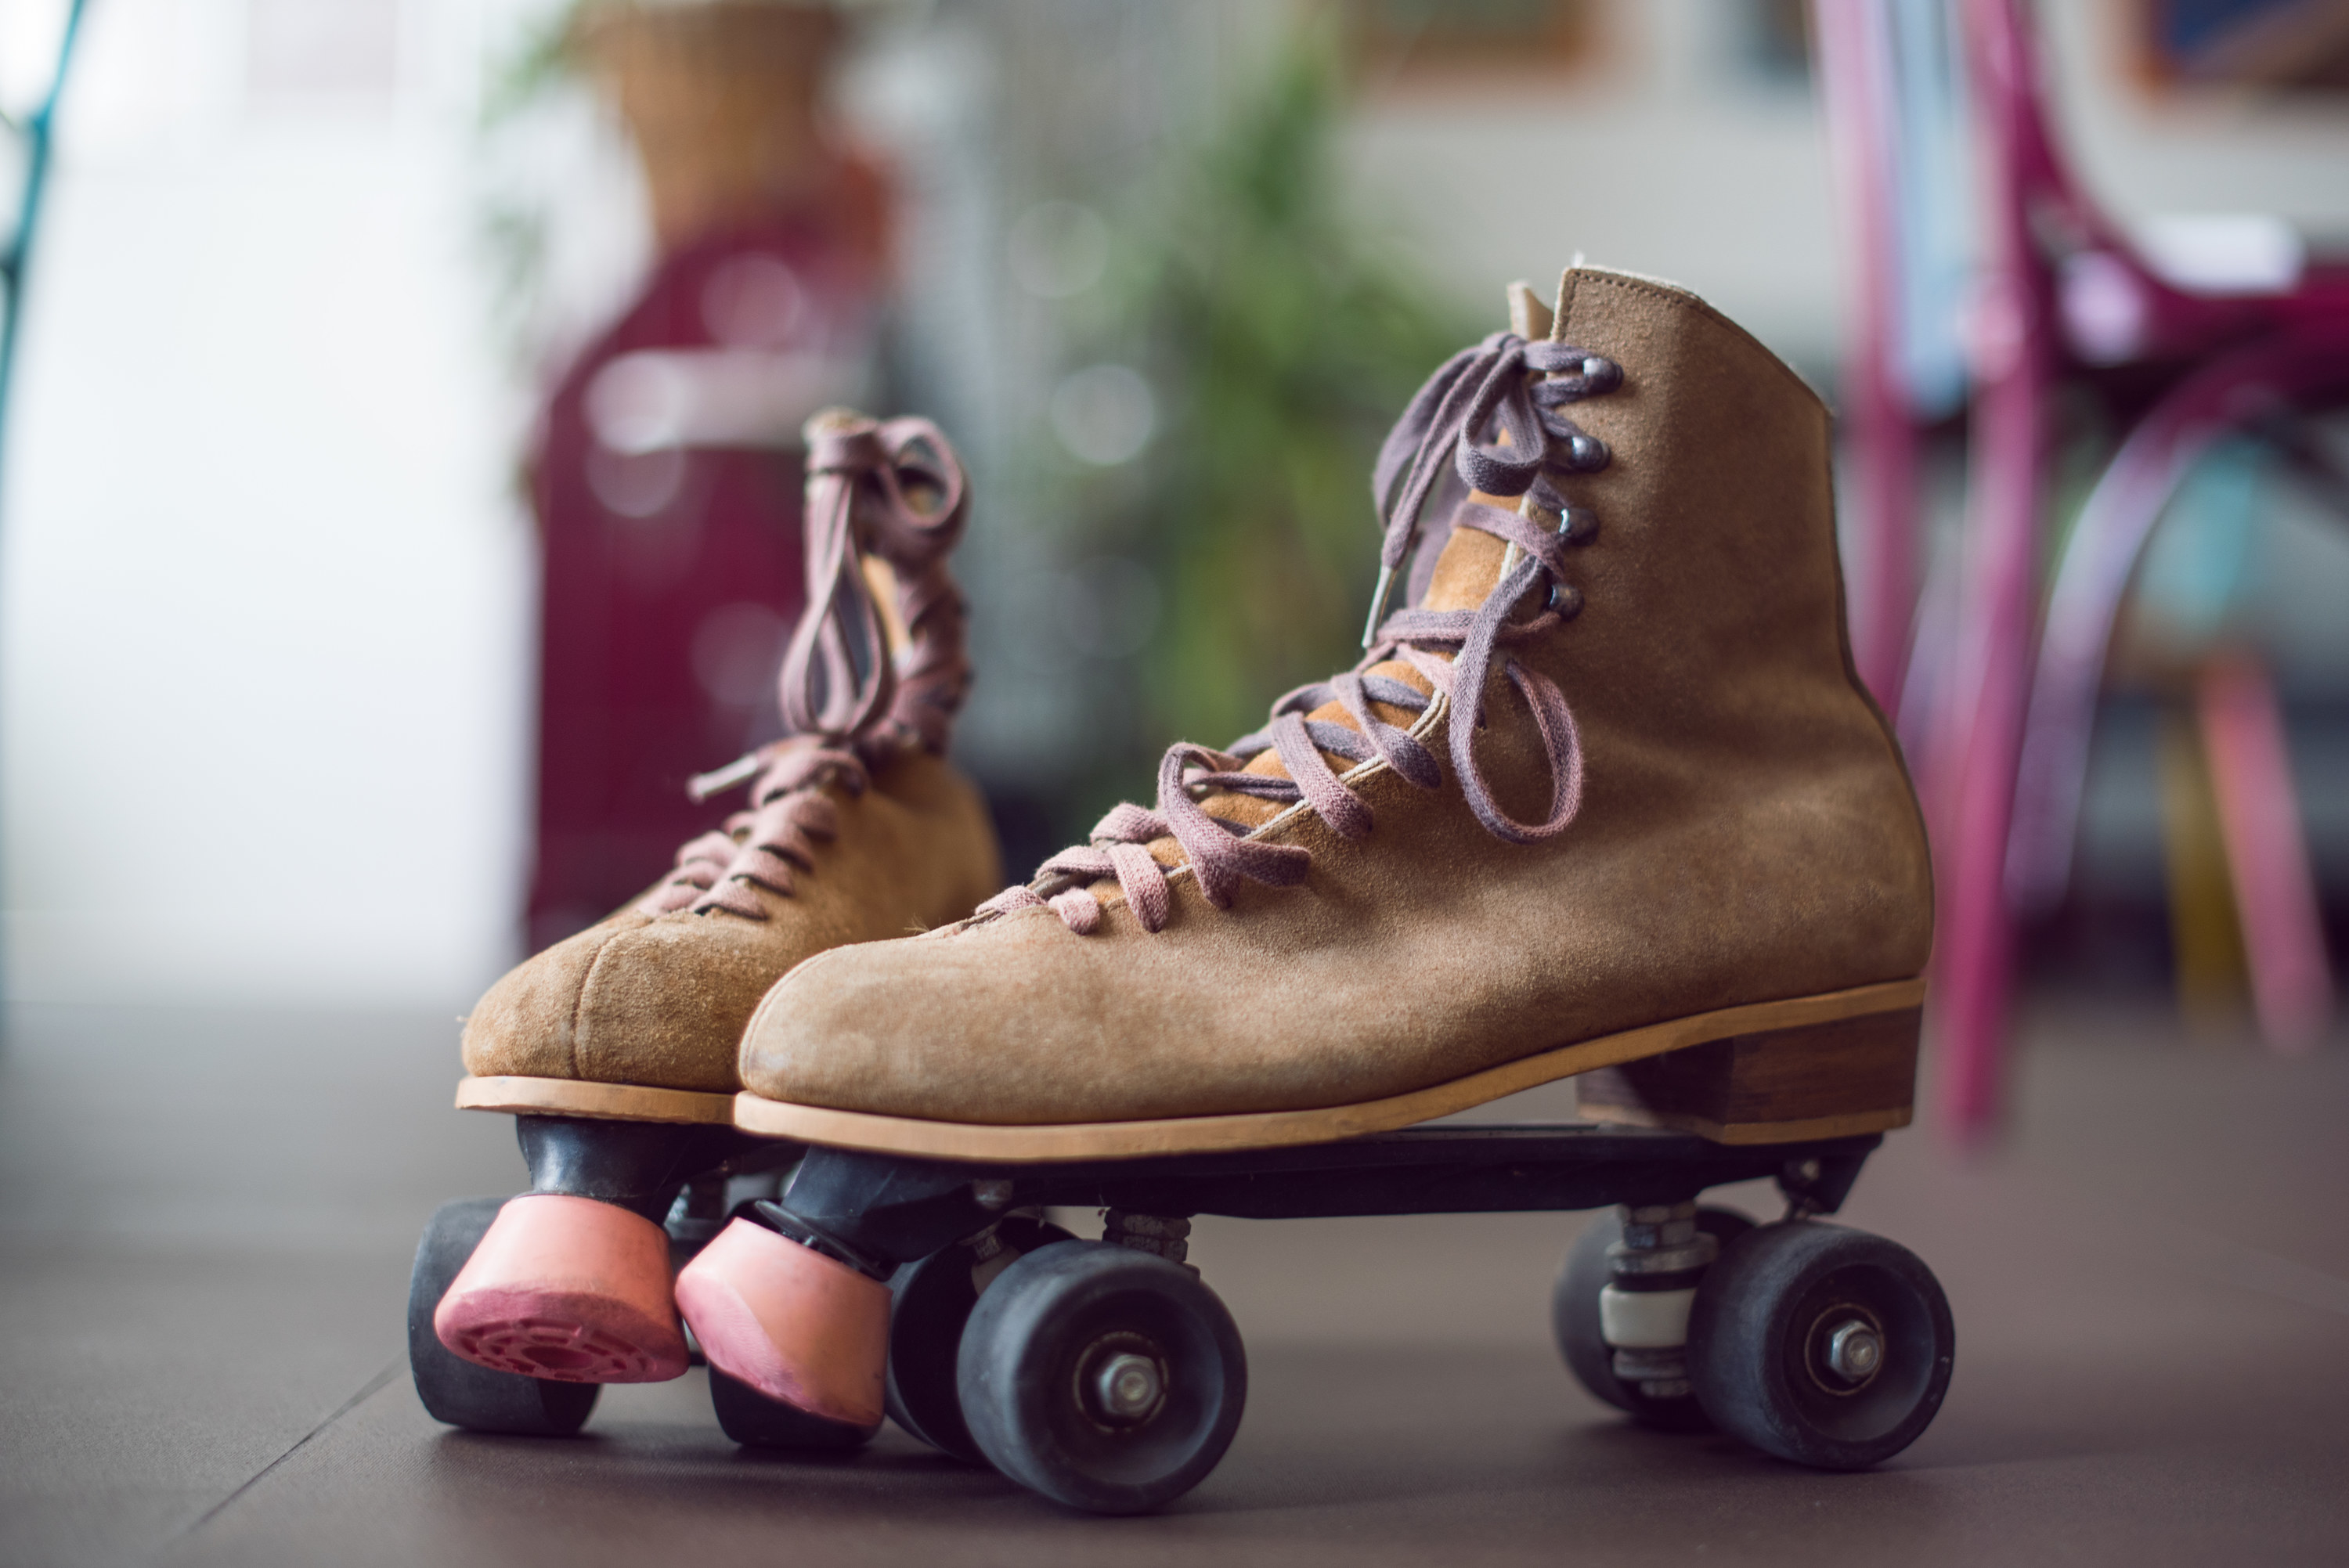 A vintage pair of roller skates